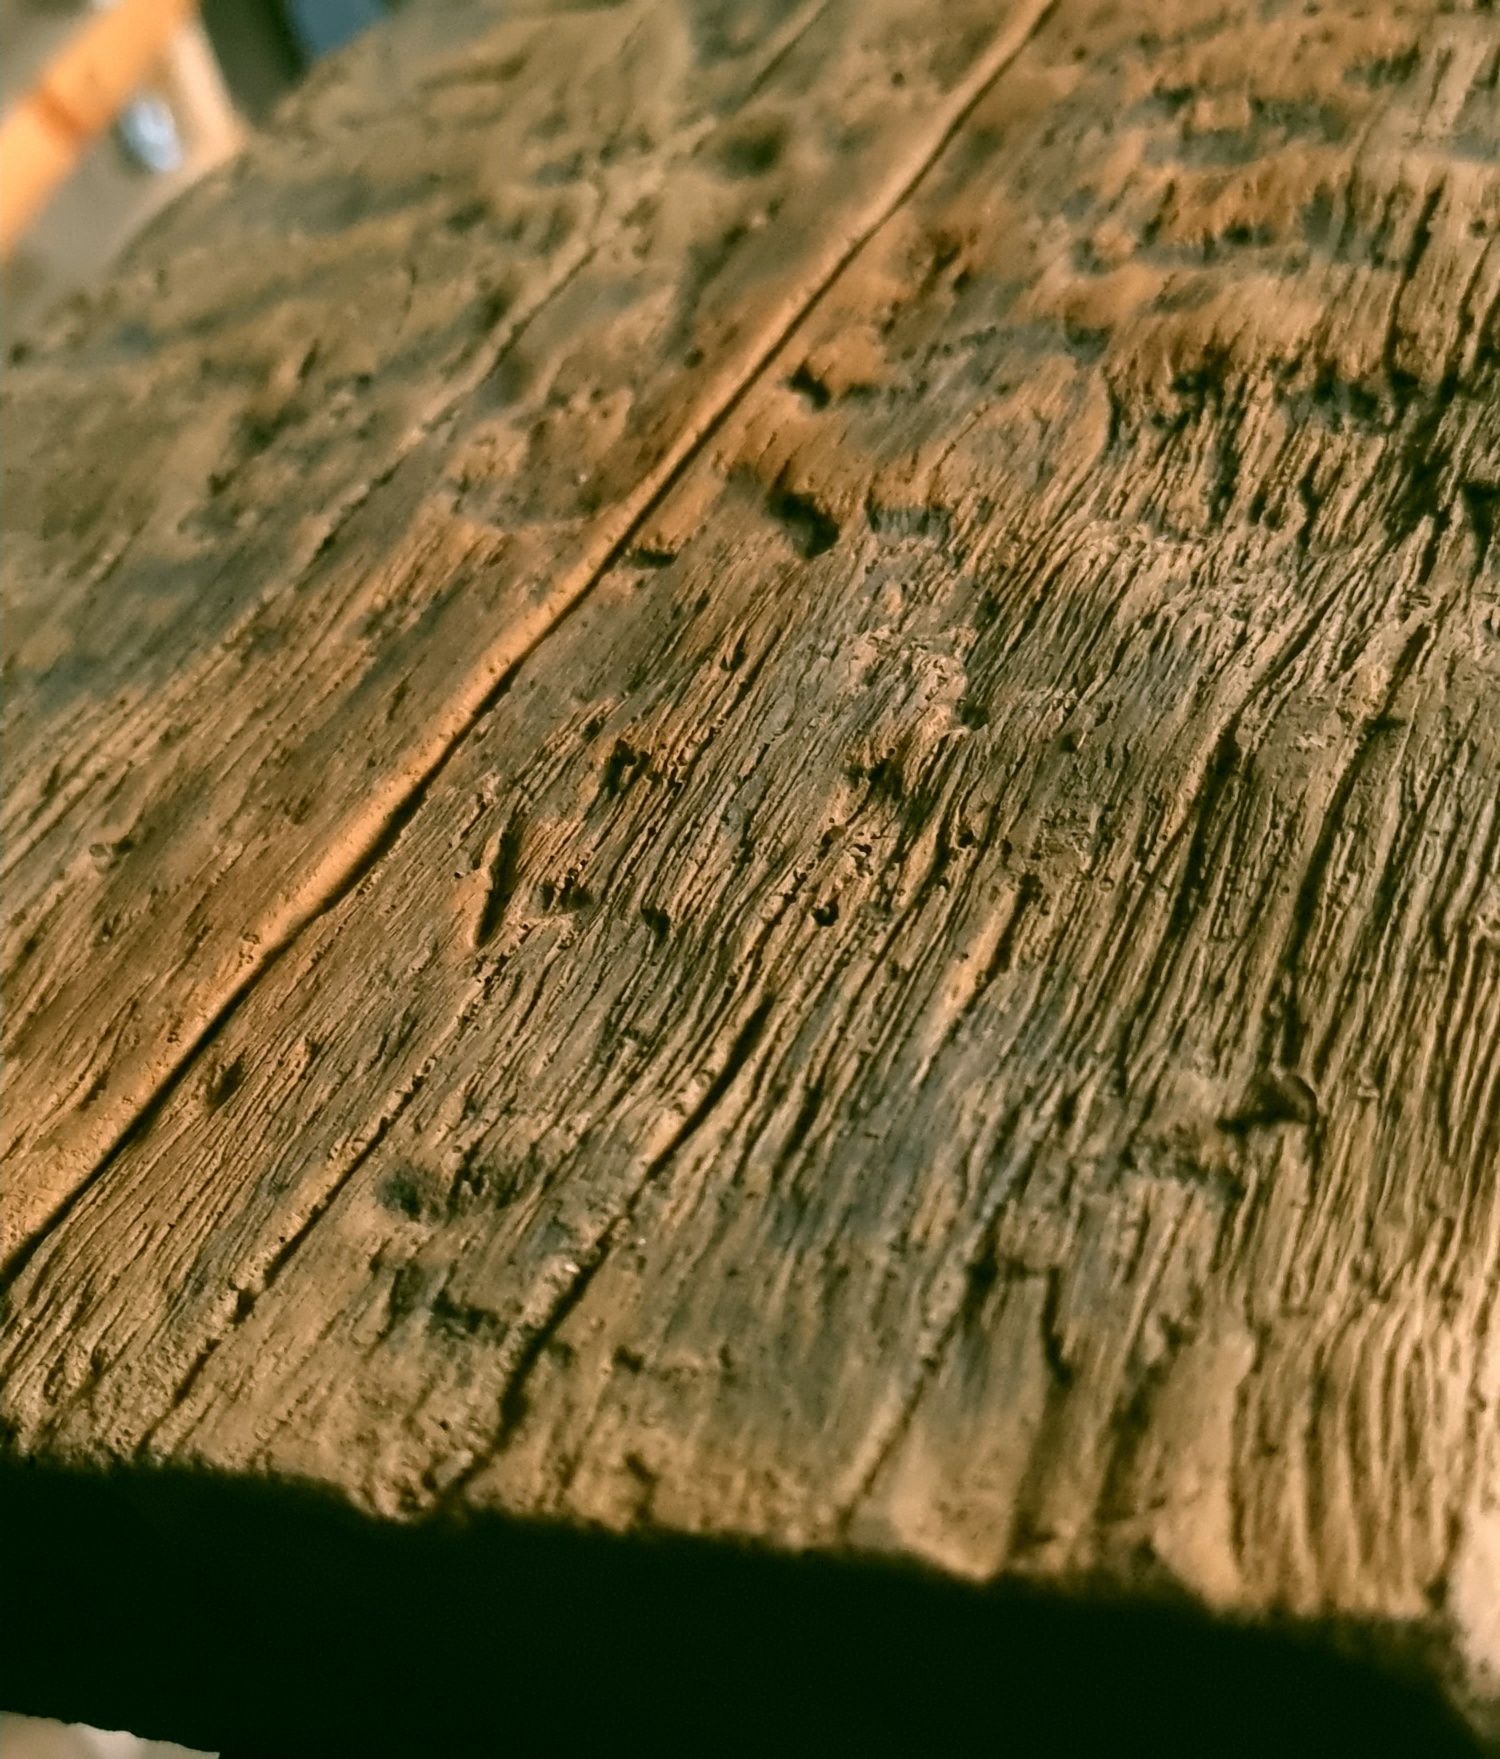 Betonowe drewno Betonowe deski imitacja drewna PRODUCENT